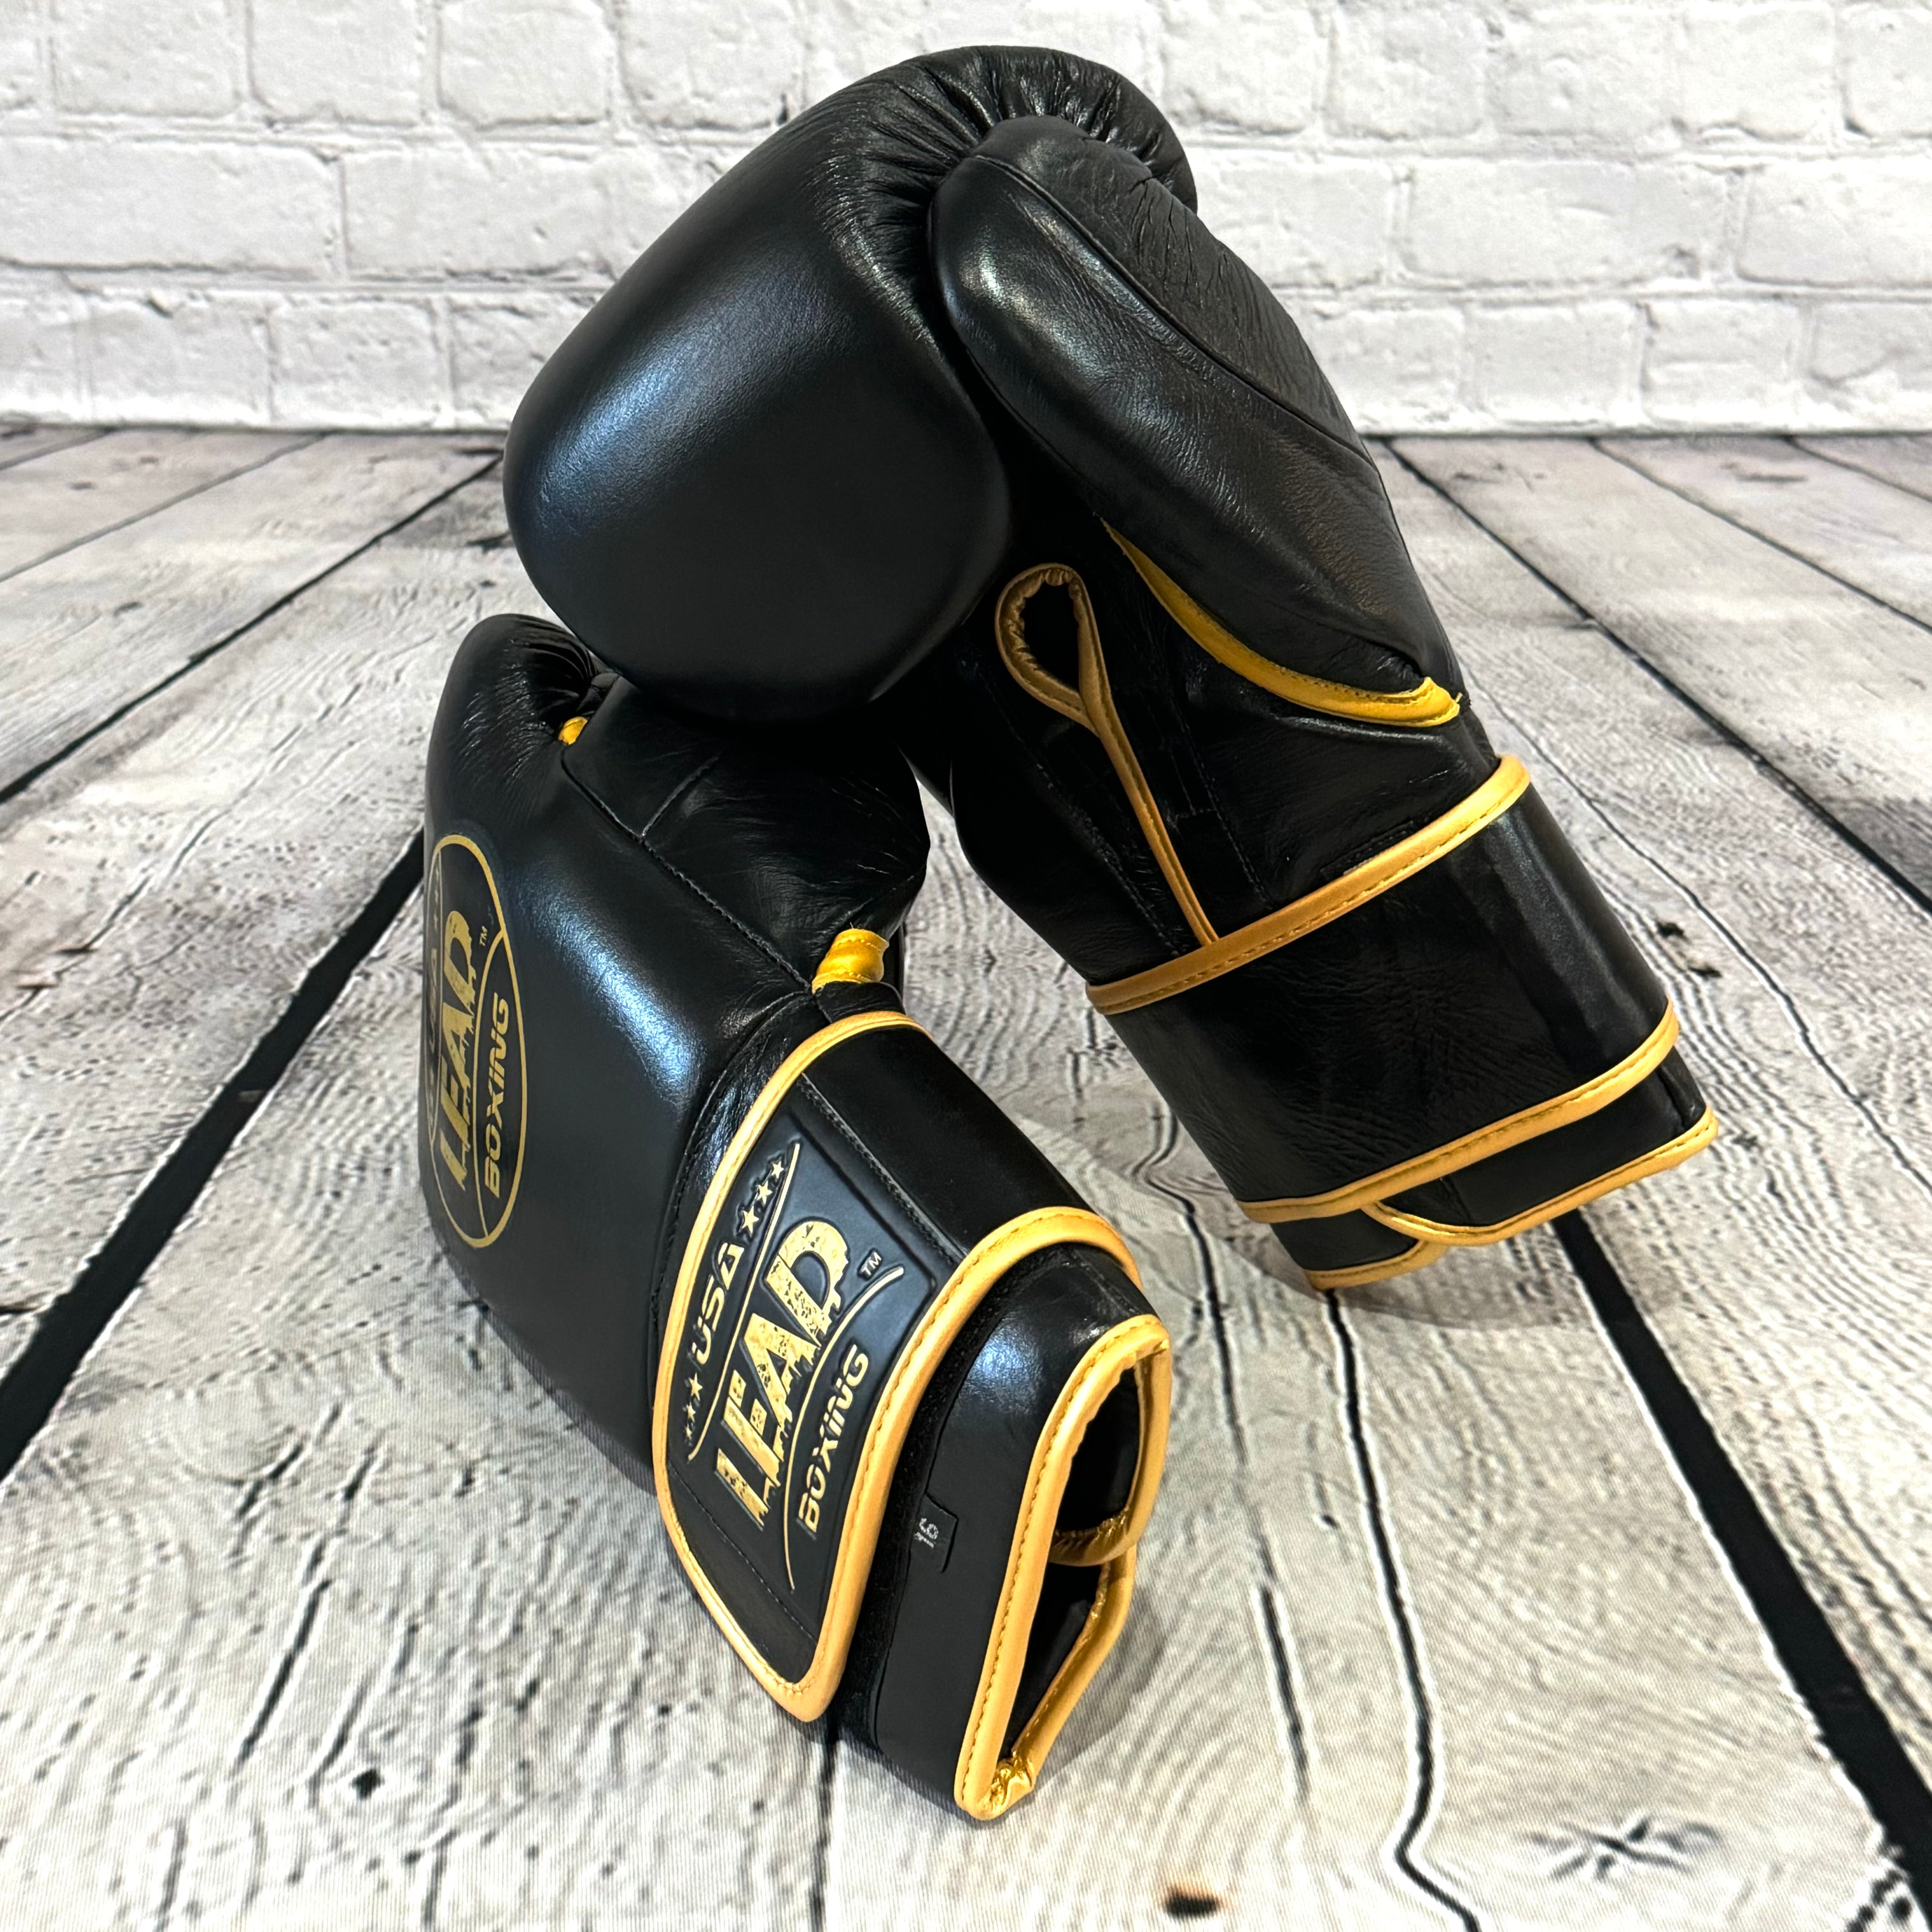 LEAD PRO Training  Velcro Gloves ( Black-Gold Logo )